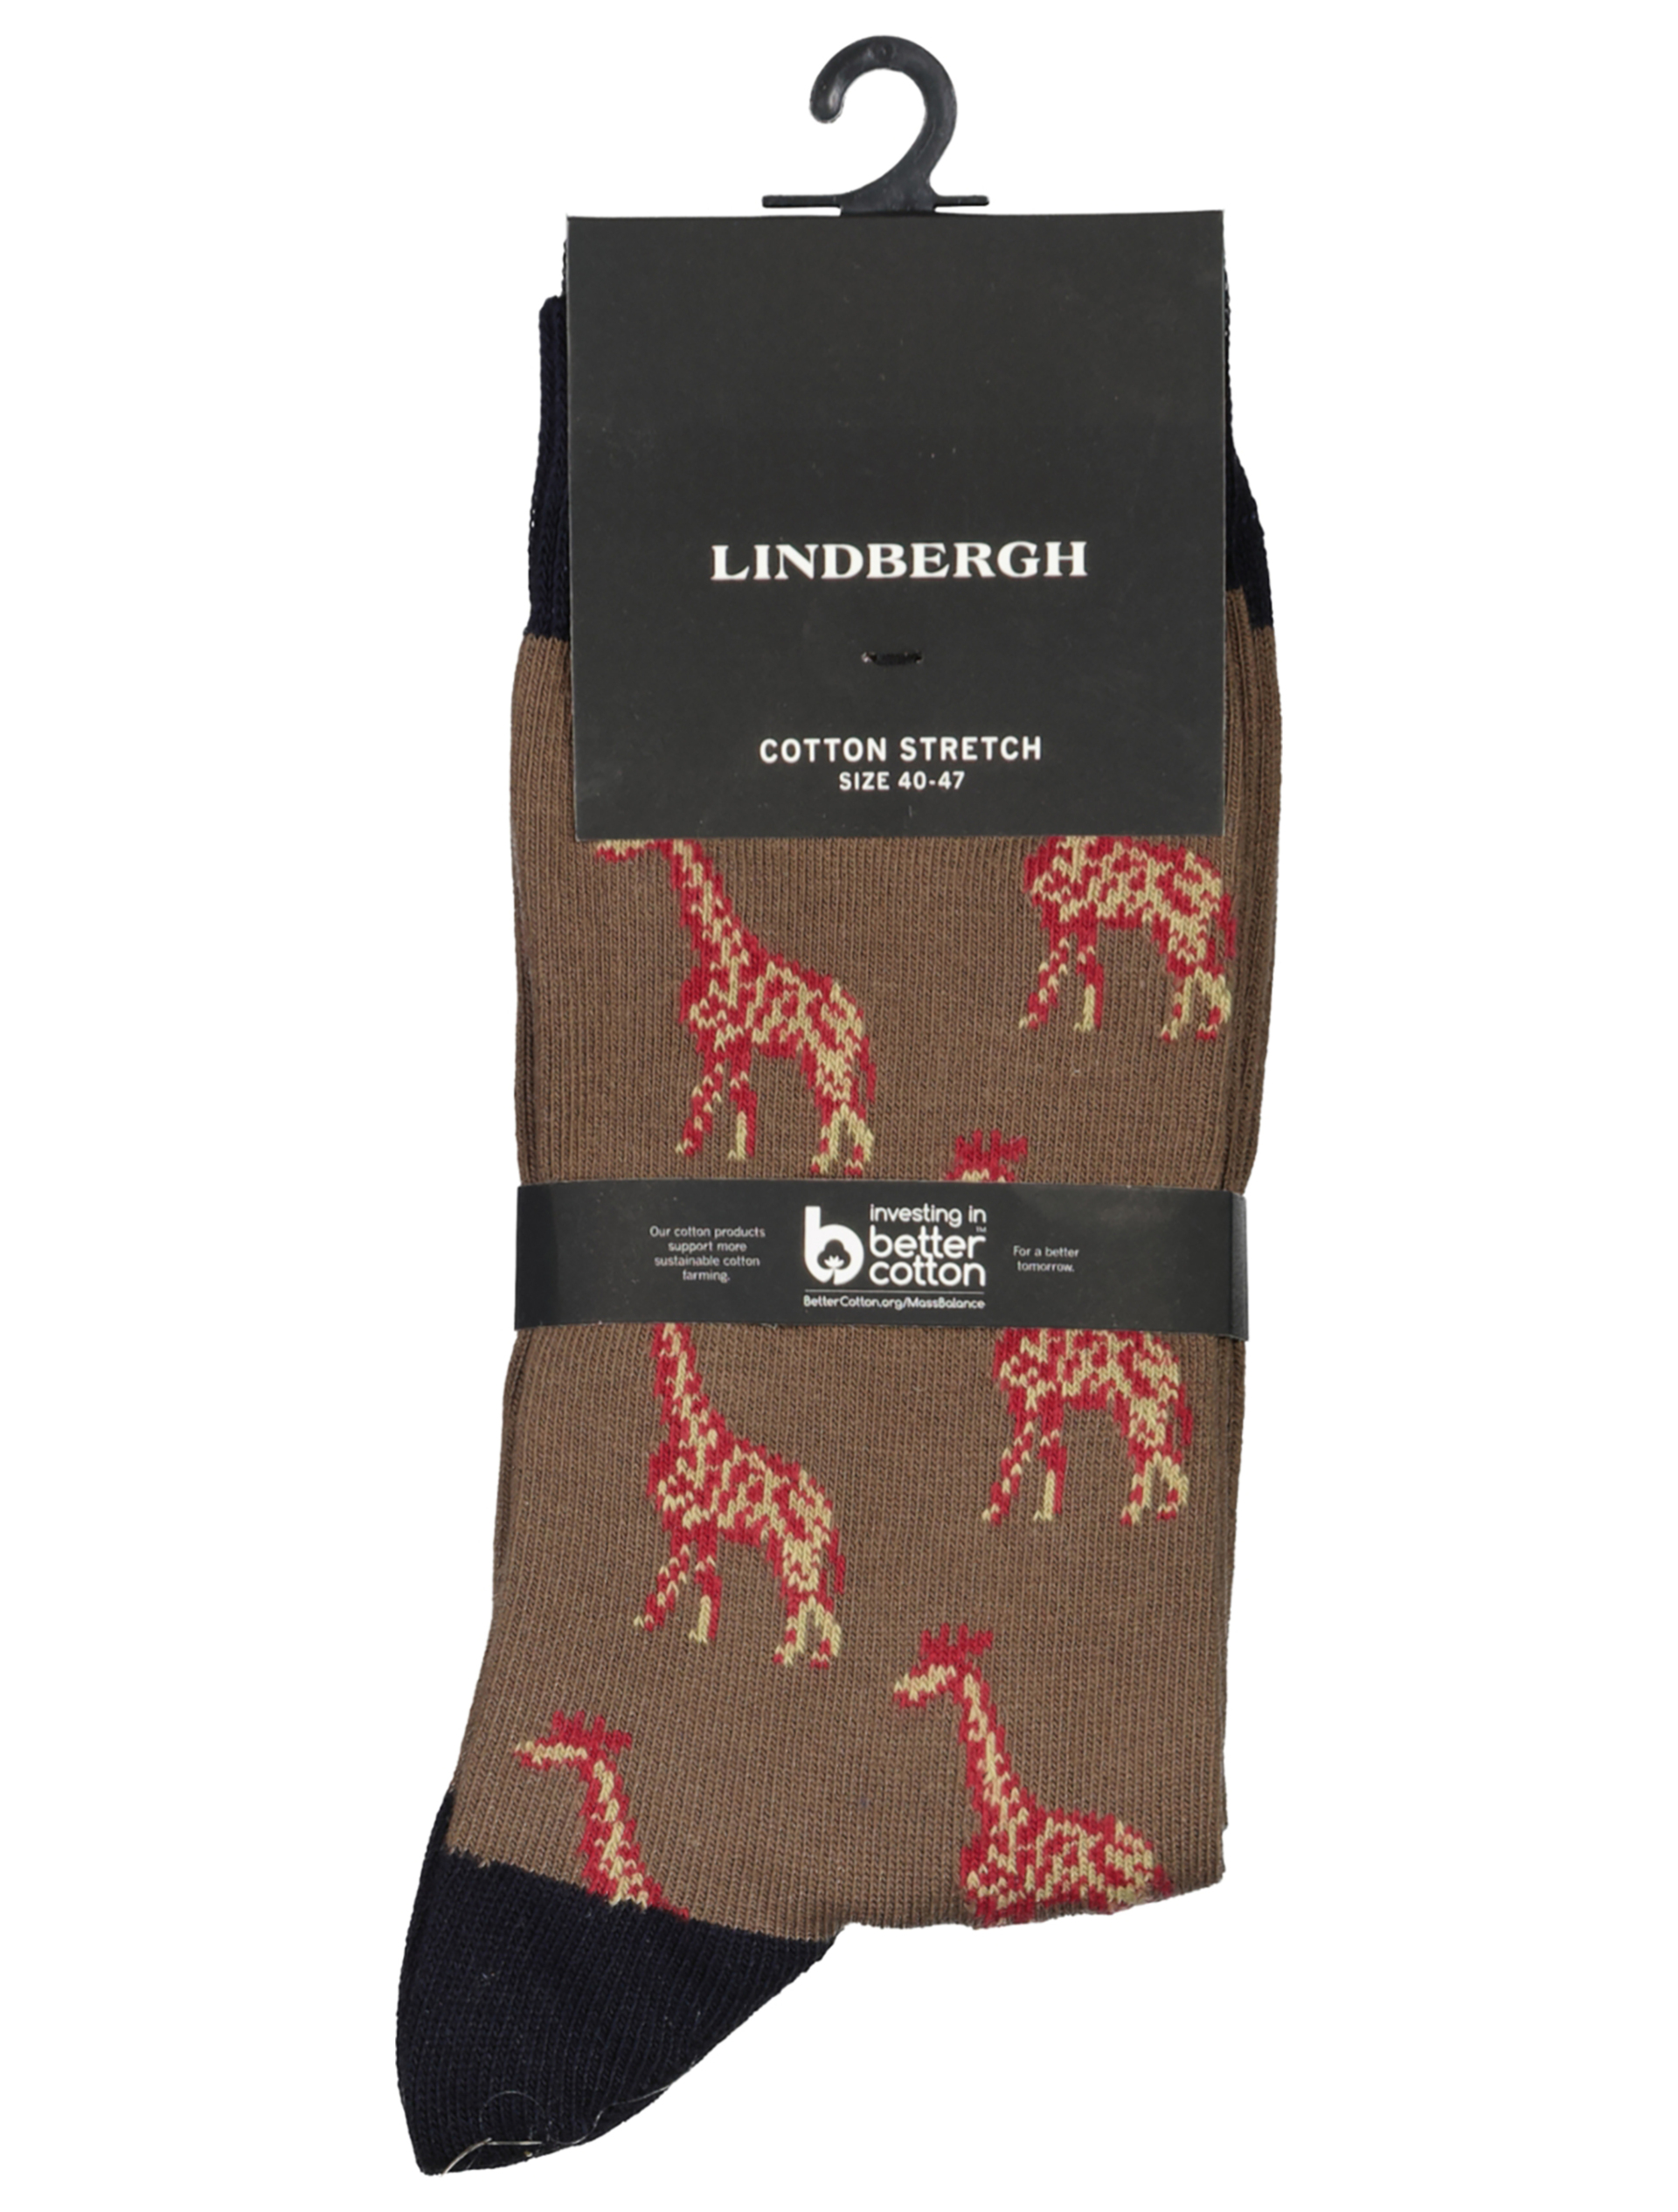 Lindbergh Socks grey / dk stone